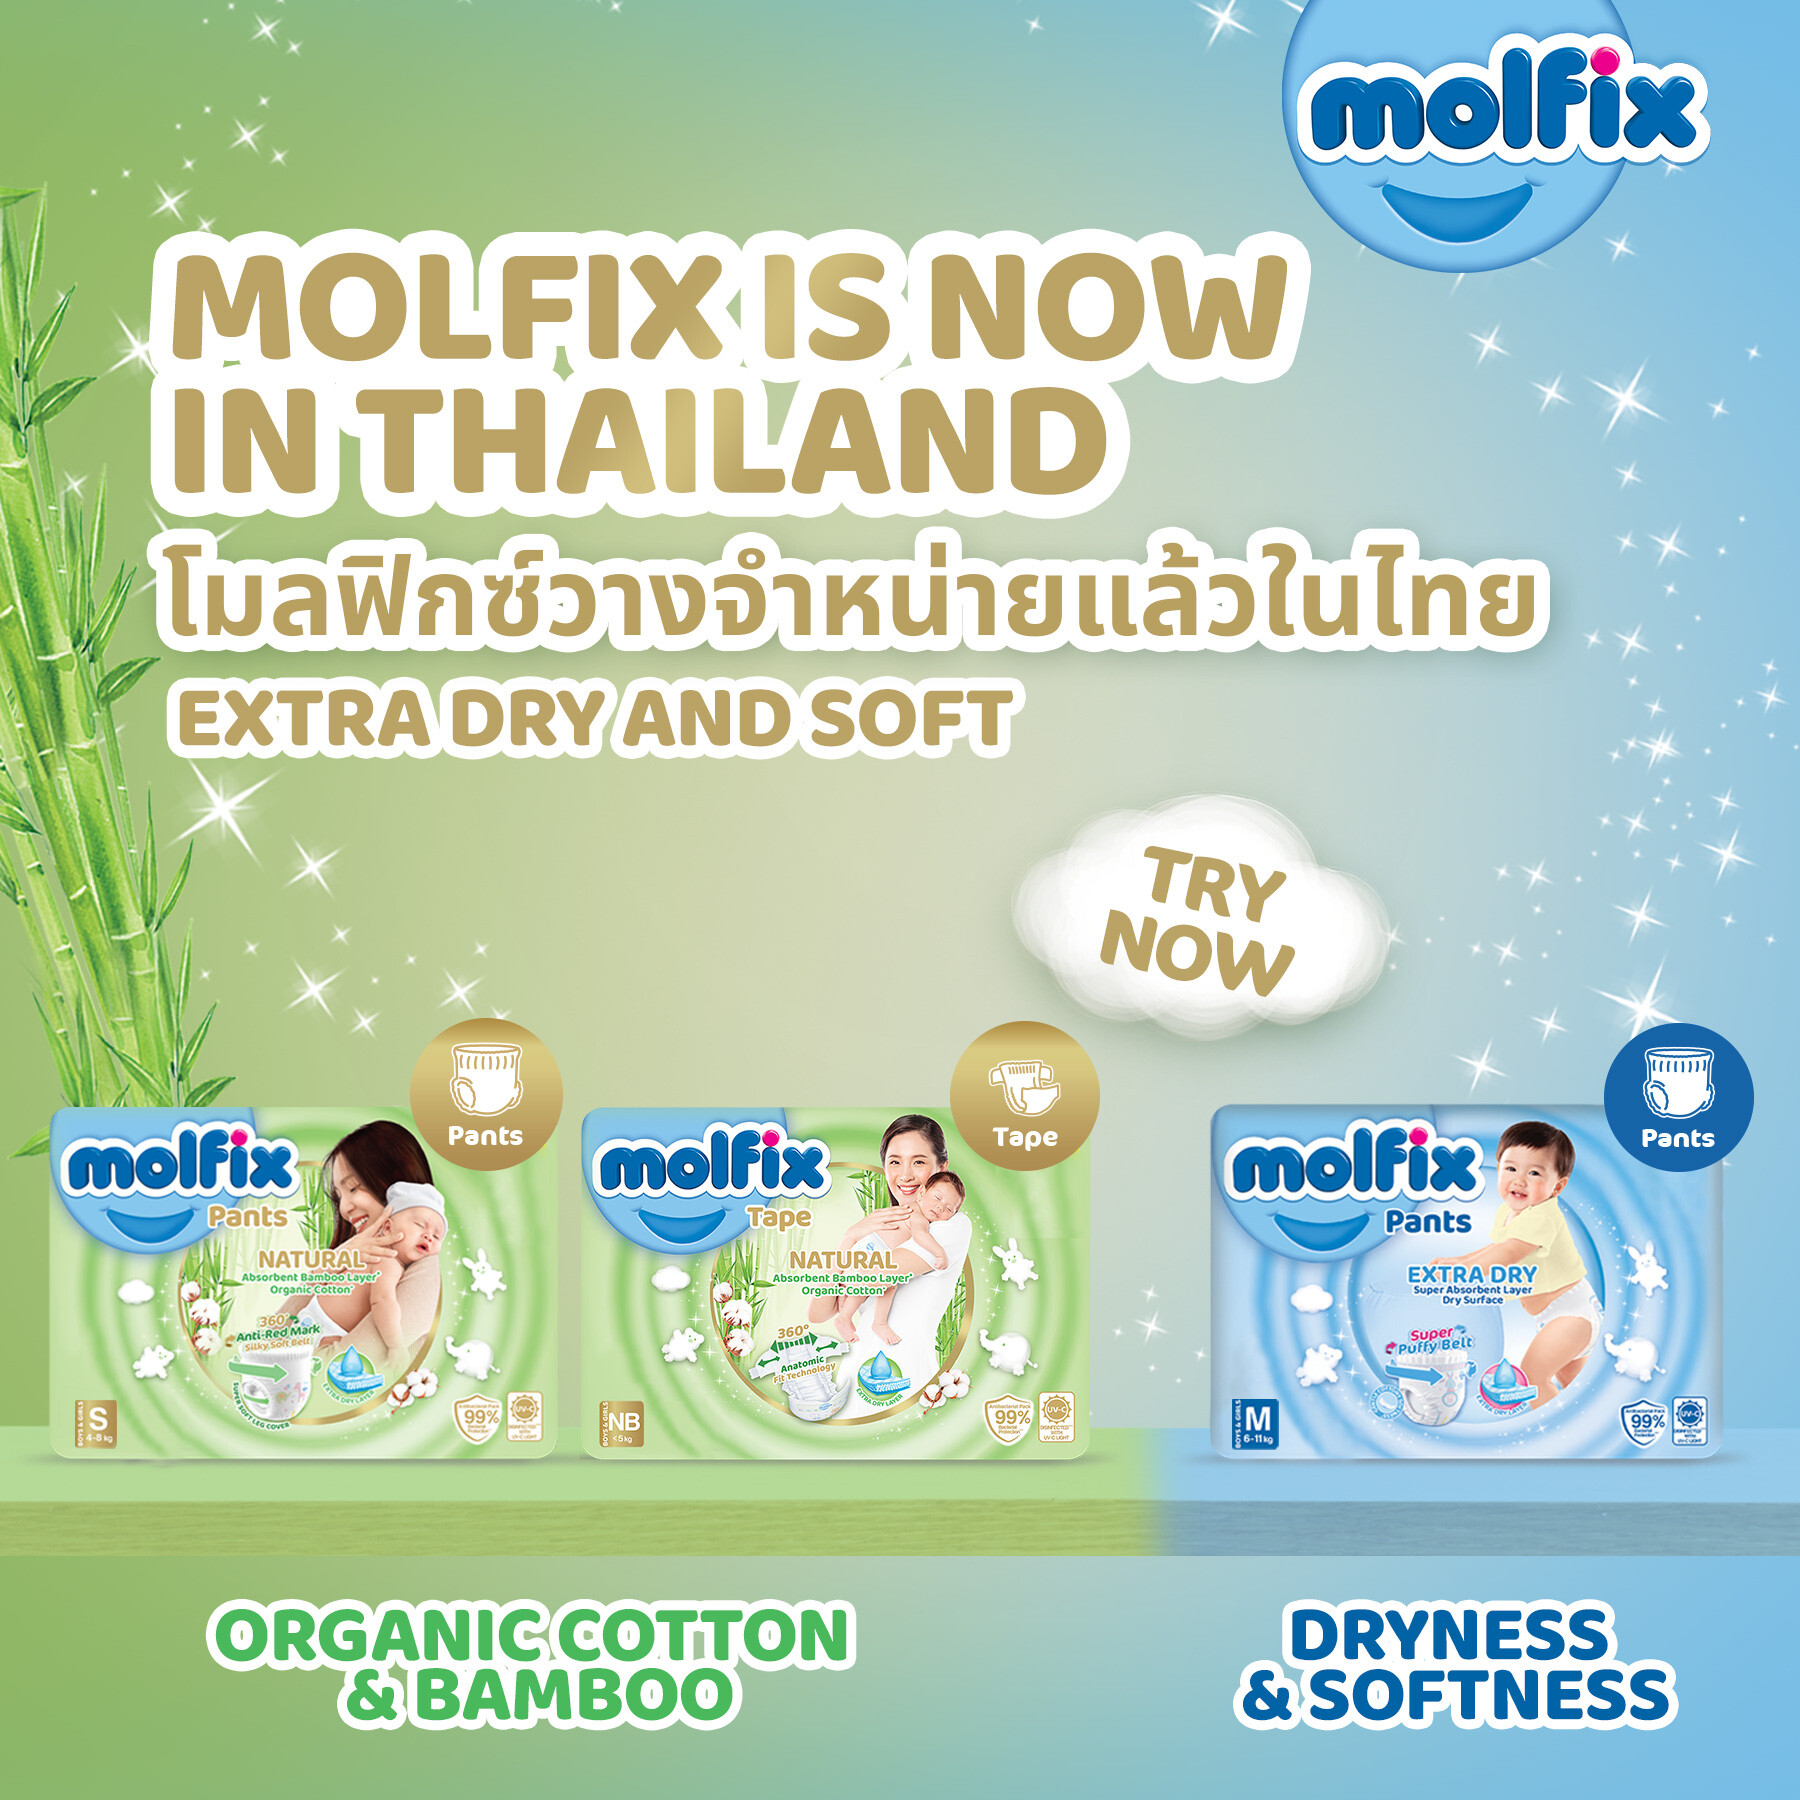 Molfix (โมลฟิกซ์) ผ้าอ้อมสำหรับเด็กคุณภาพชั้นนำระดับโลก เปิดตัวครั้งแรกในประเทศไทย  พร้อมแบรนด์แอมบาสเดอร์คุณแม่คนสวย "คุณศรีริต้า เจนเซ่น  ณรงค์เดช"